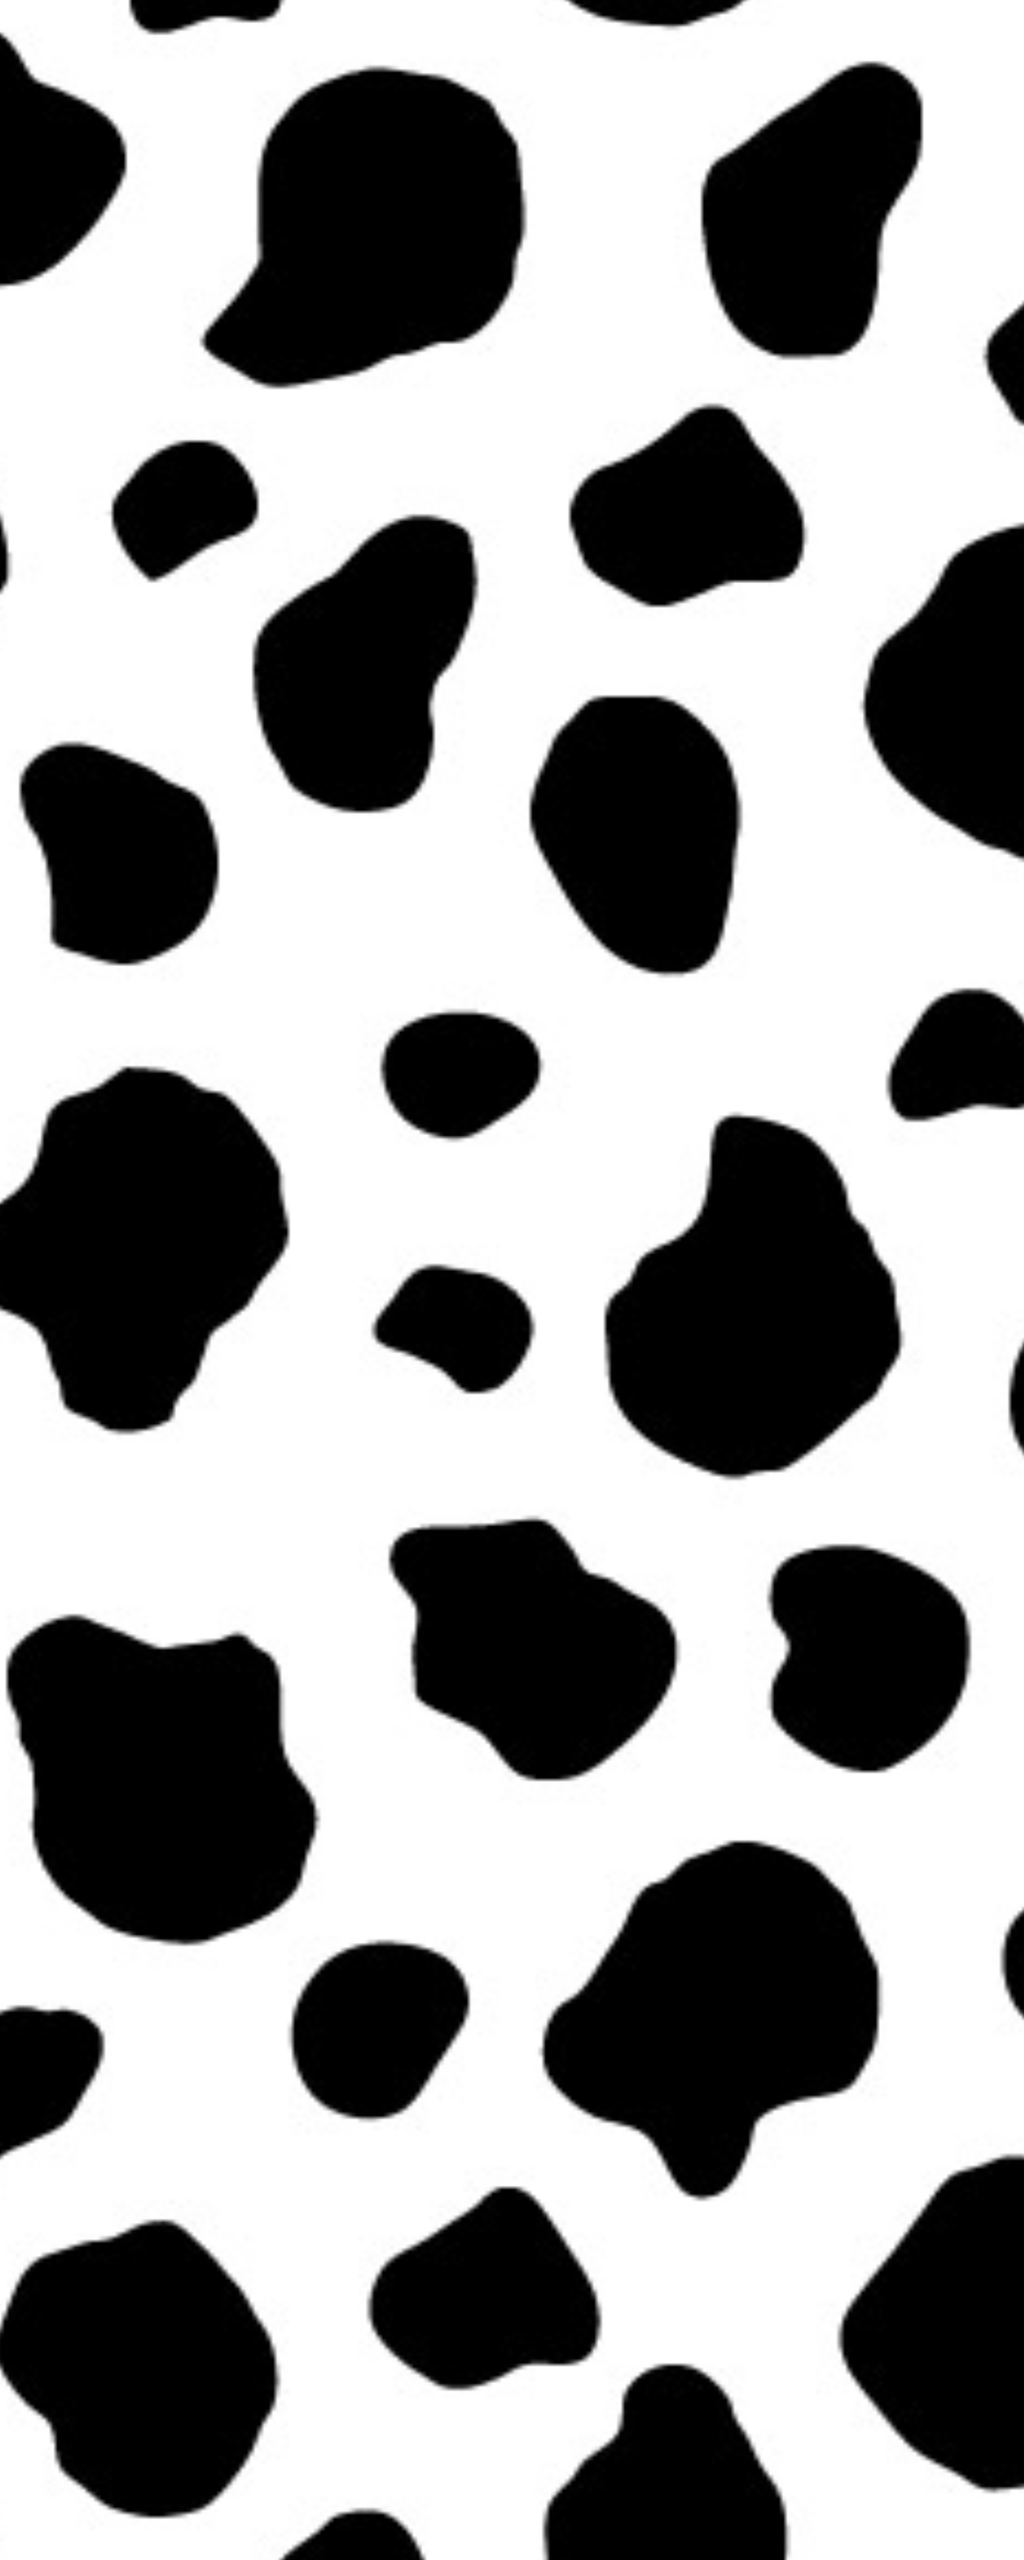 Custom Background 6 - Cow Print by Burning Sapphire on DeviantArt